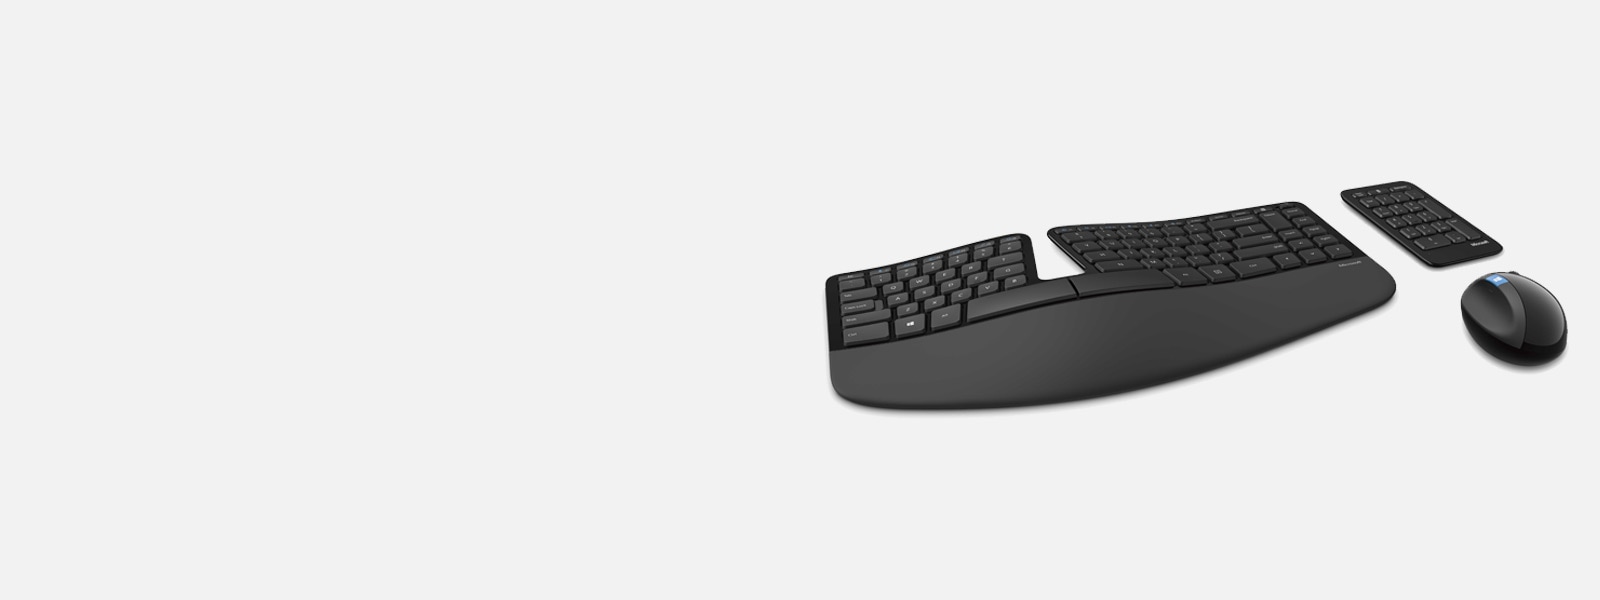 Microsoft Sculpt ergonomic keyboard, mouse, and number pad desktop